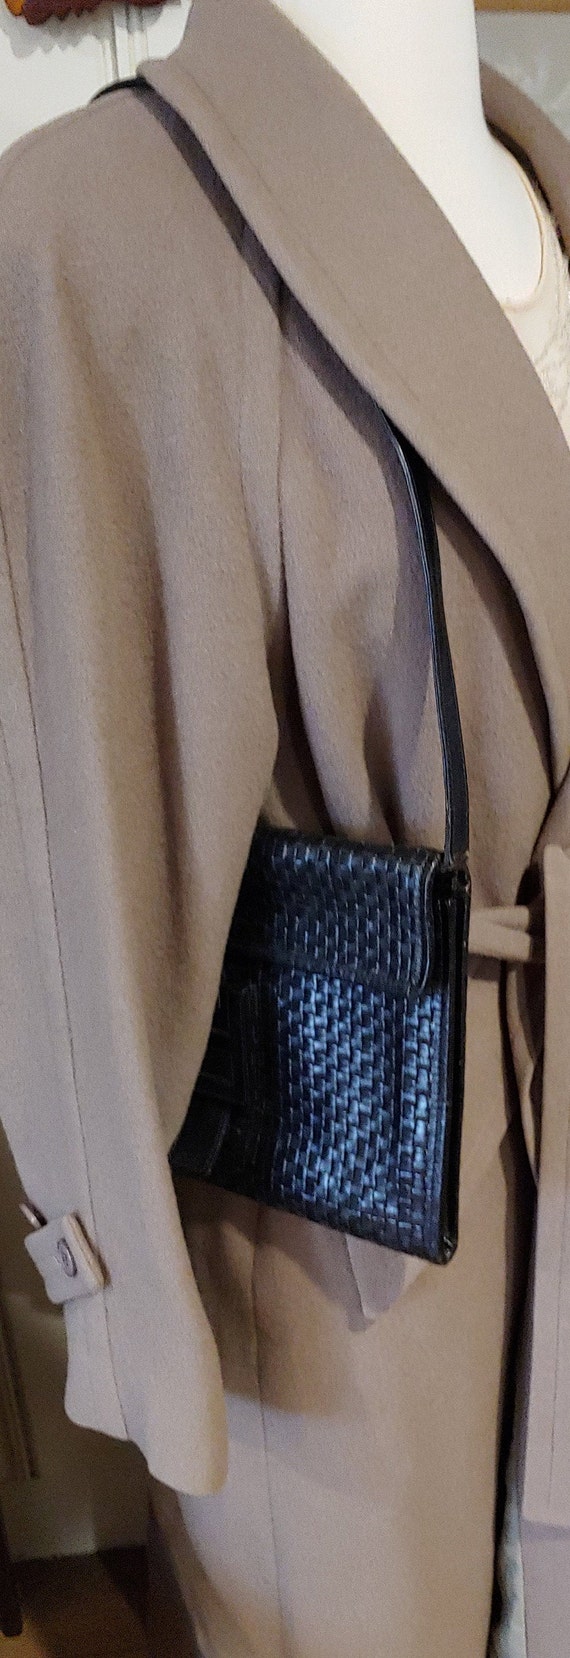 Fendi Clutch Black Woven Leather w Shoulder Strap - image 3